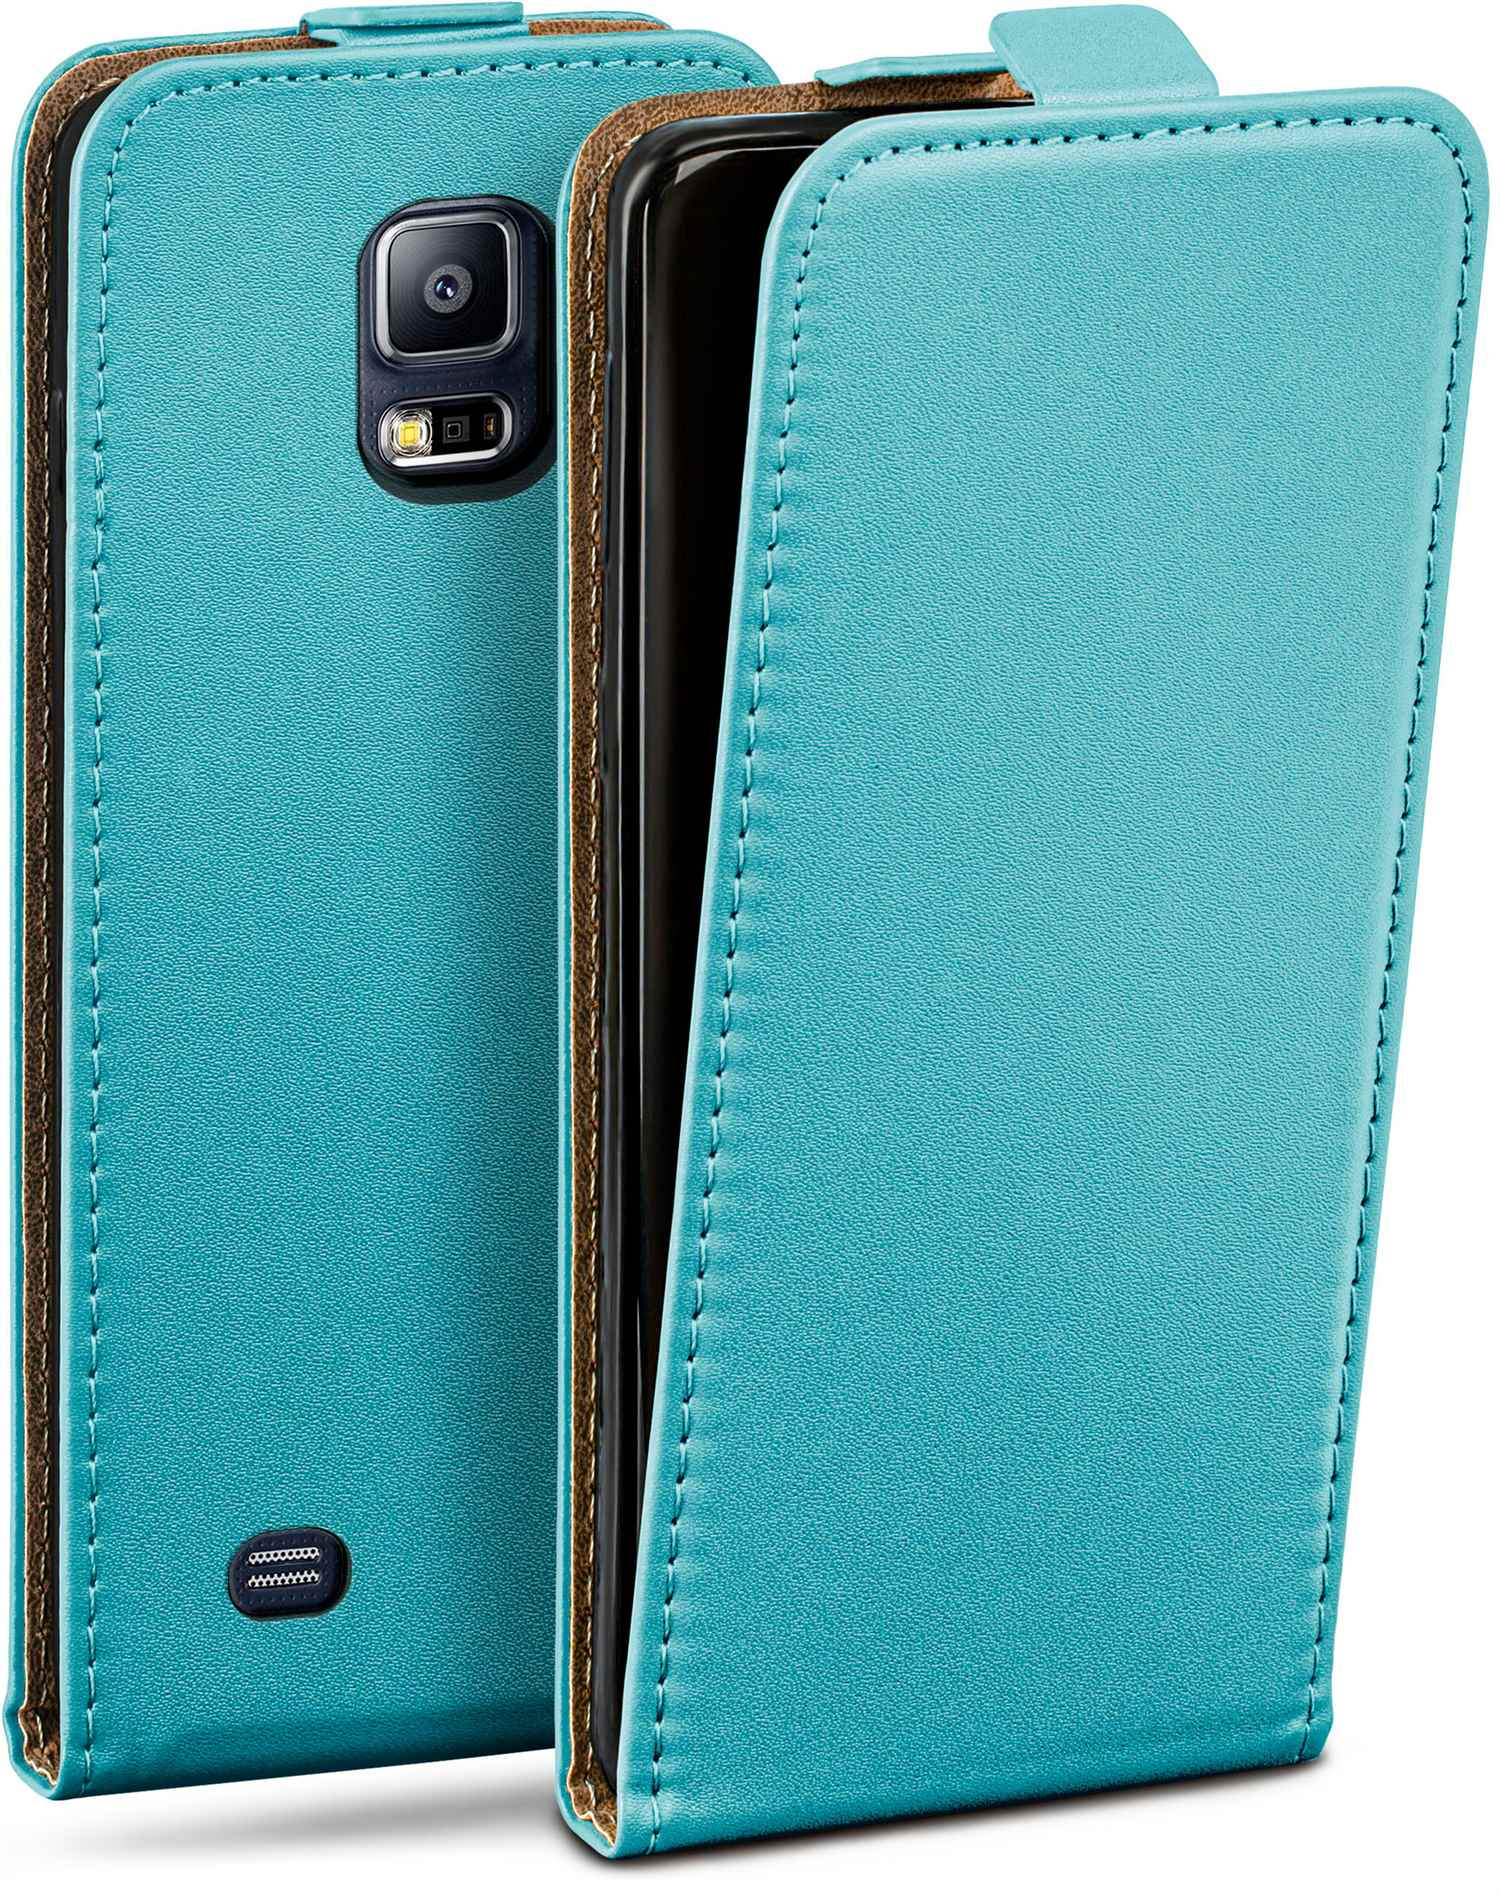 MOEX Aqua-Cyan Cover, Flip Galaxy S5 Case, Neo, Samsung, Flip